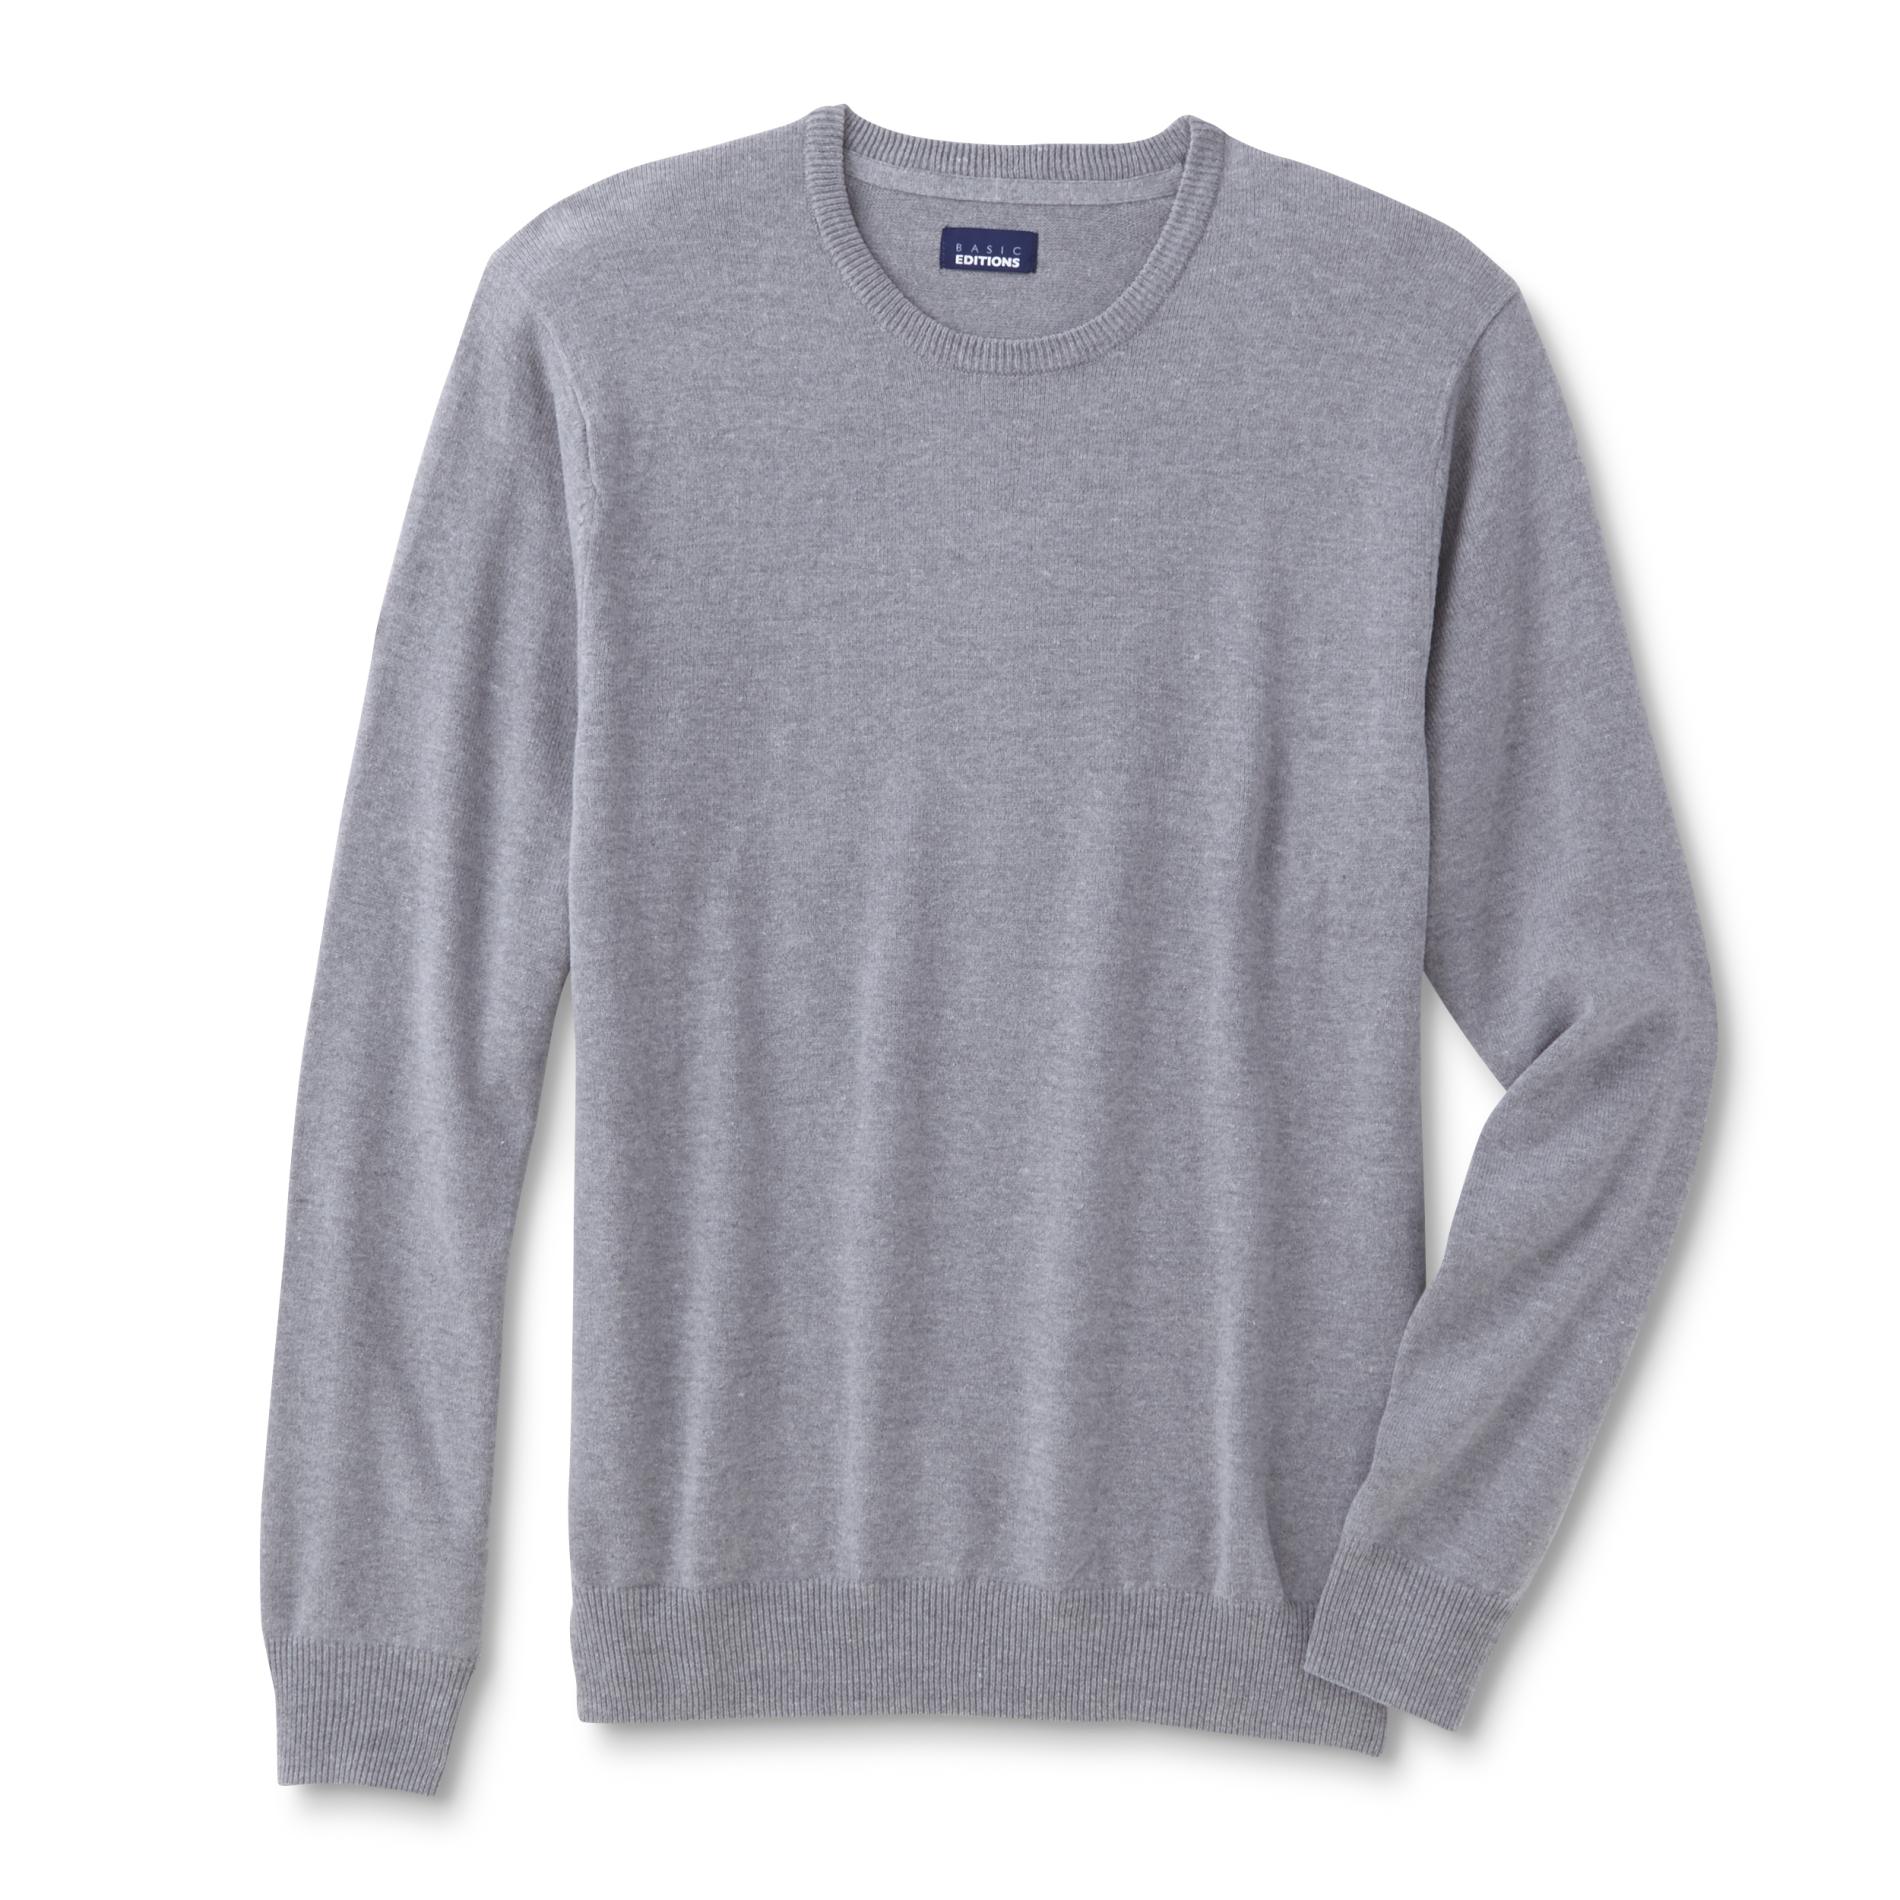 Basic Editions Men's Crew Neck Sweater